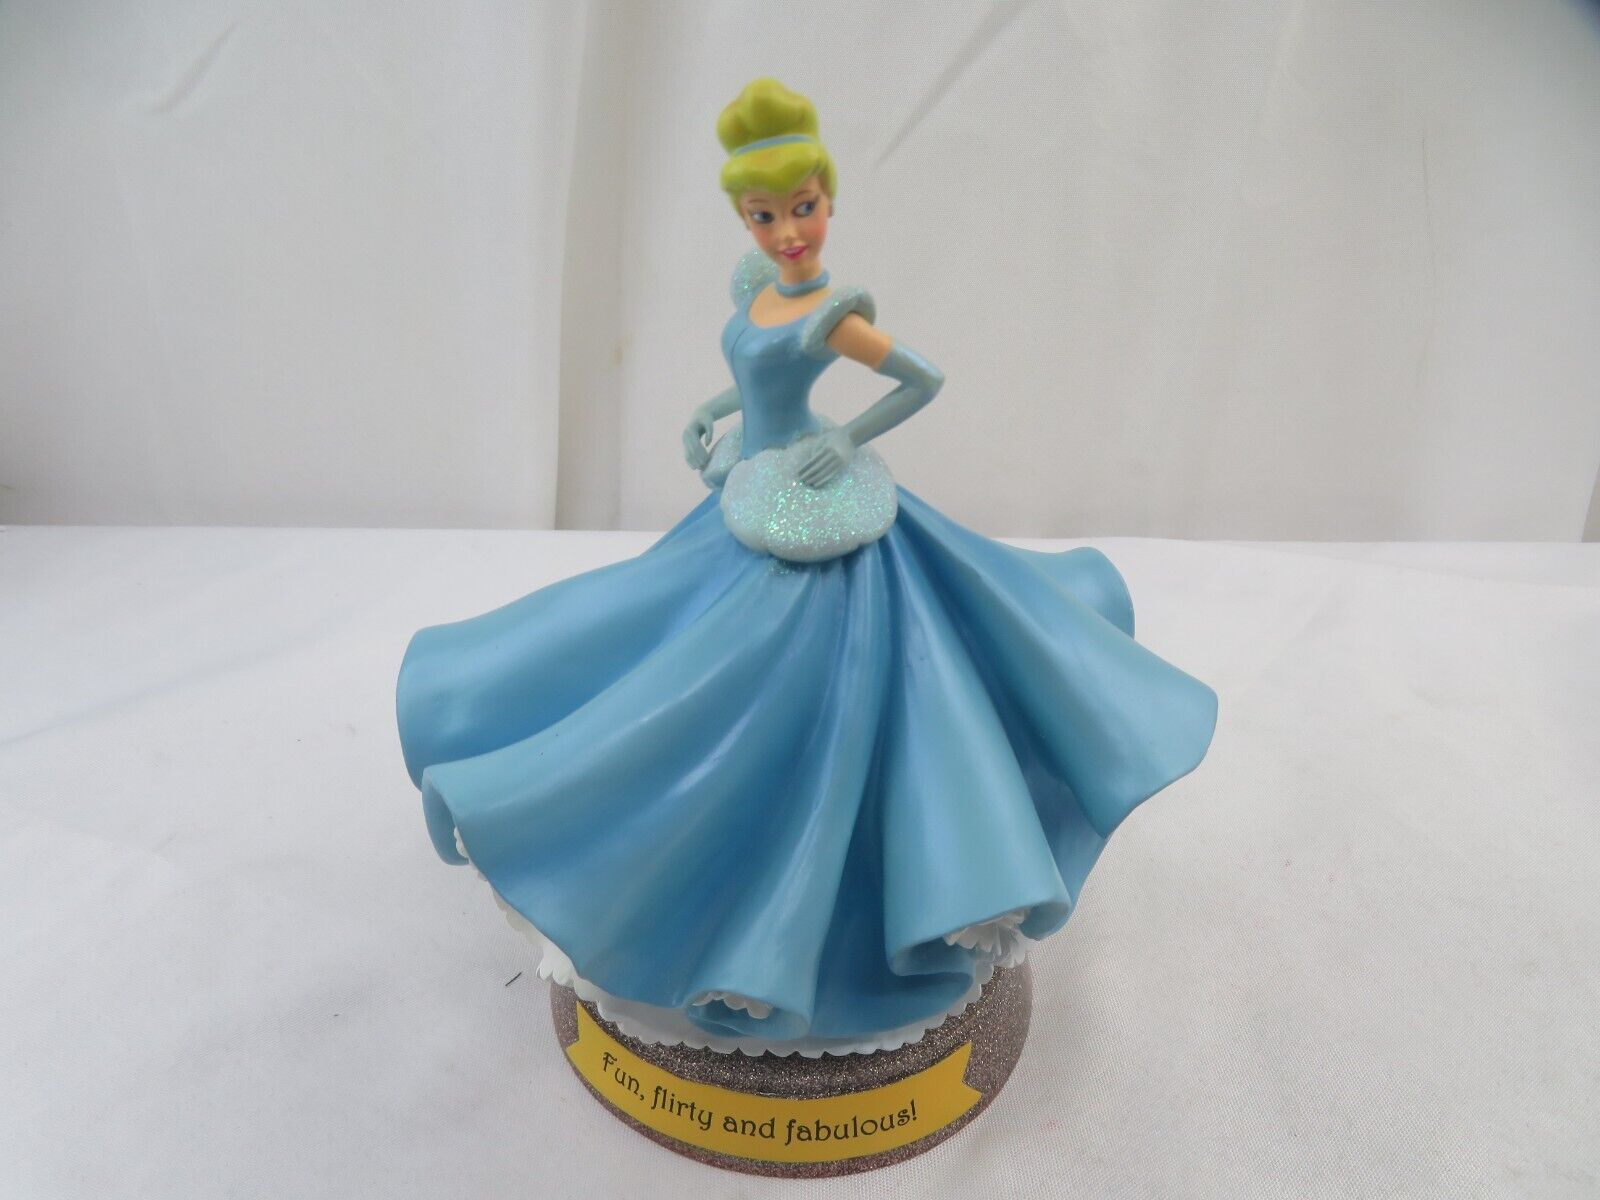 Life According To Disney Princesses Cinderella 17873 Fun, flirty and fabulous